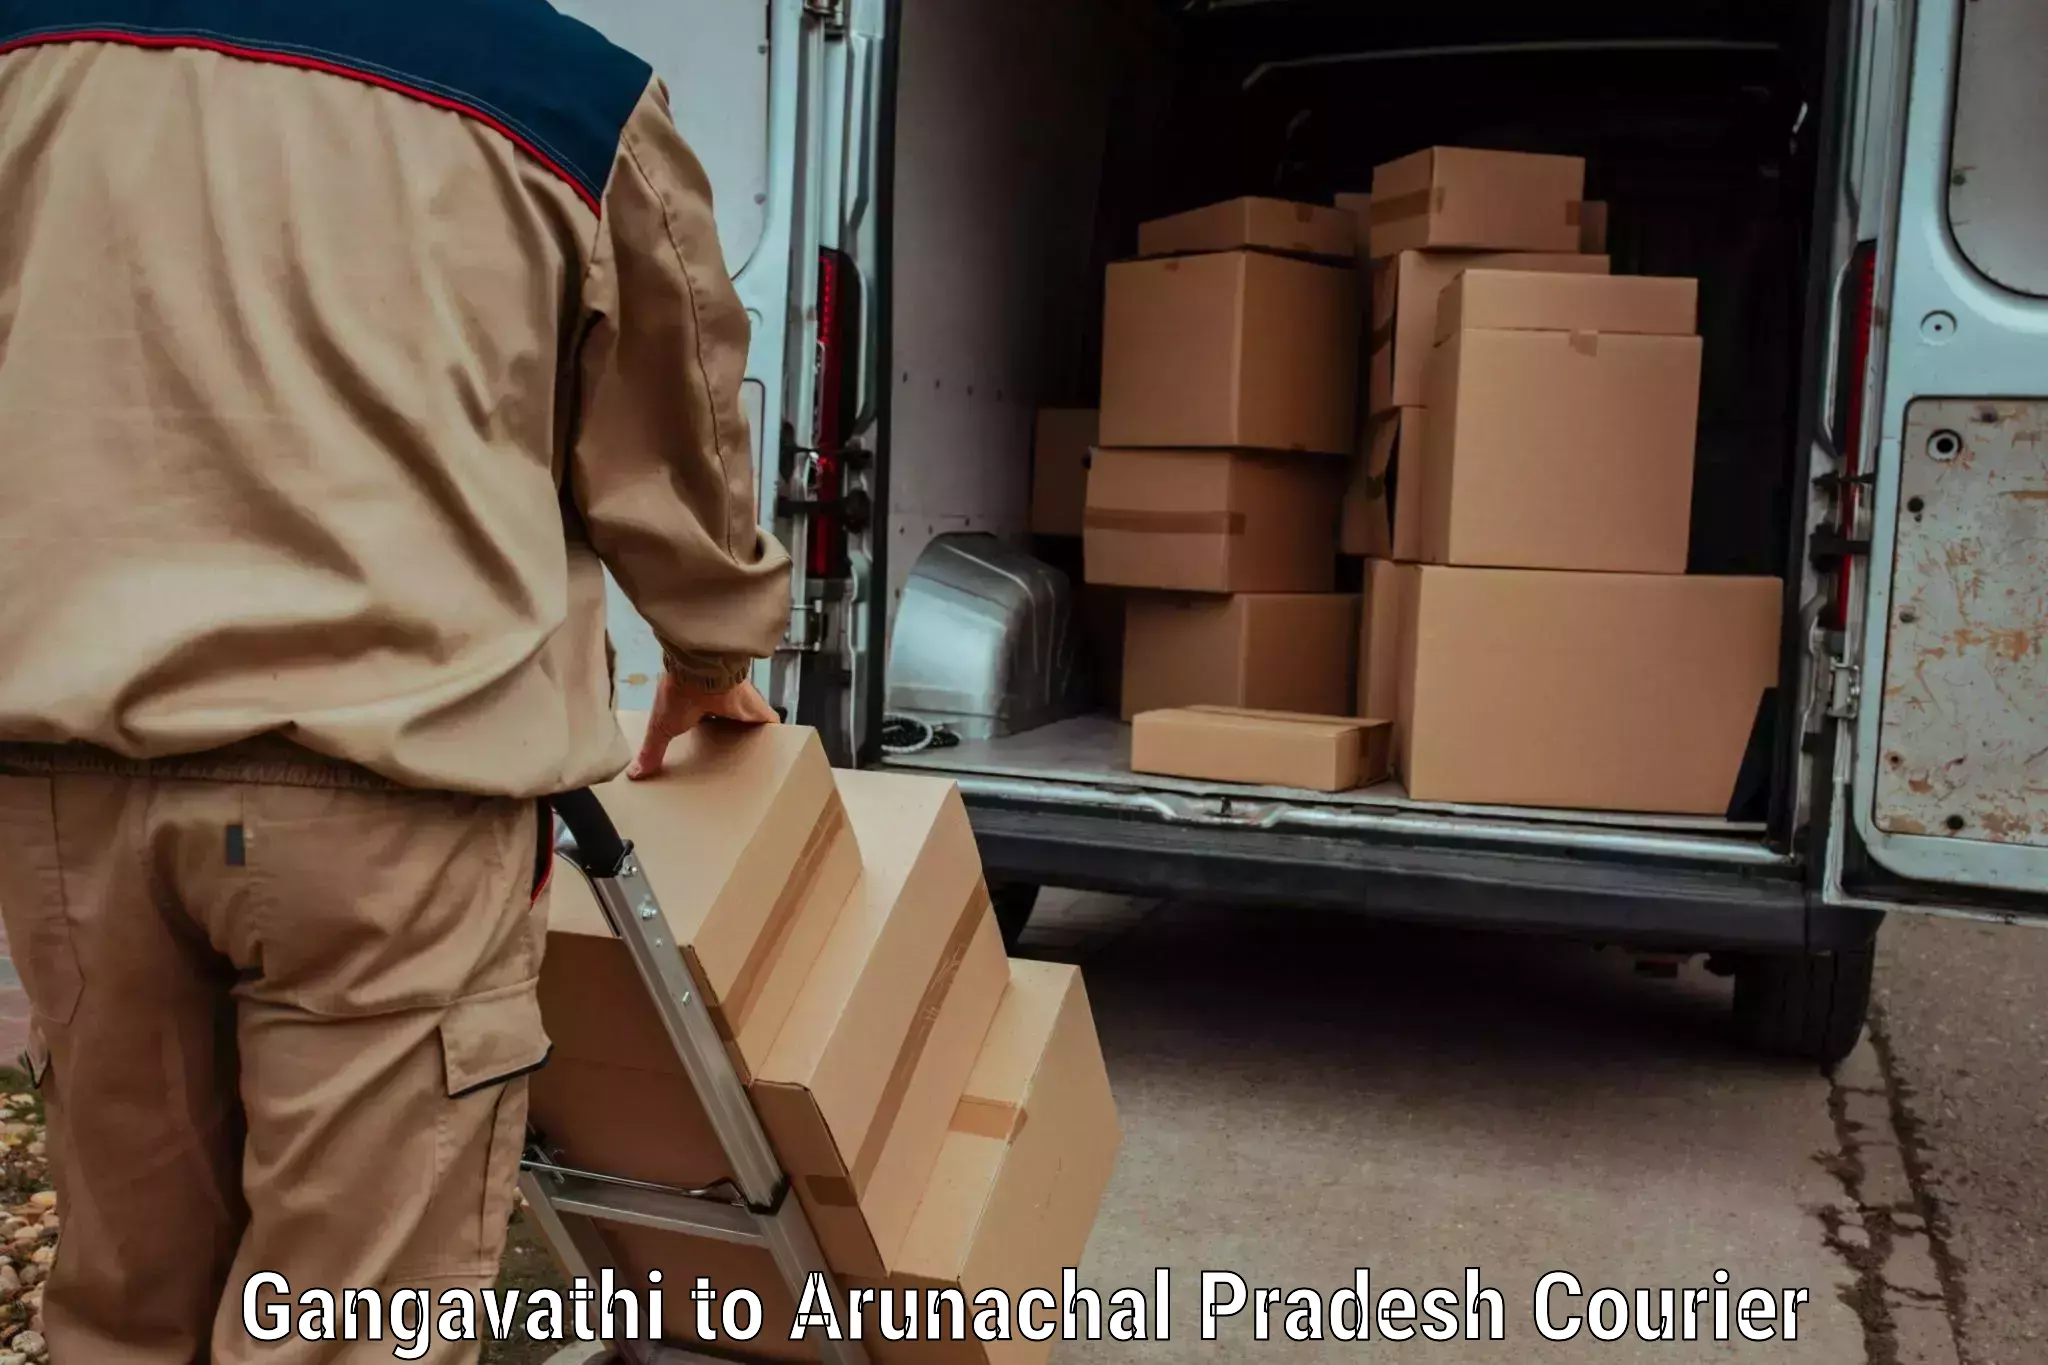 Express delivery network Gangavathi to Namsai